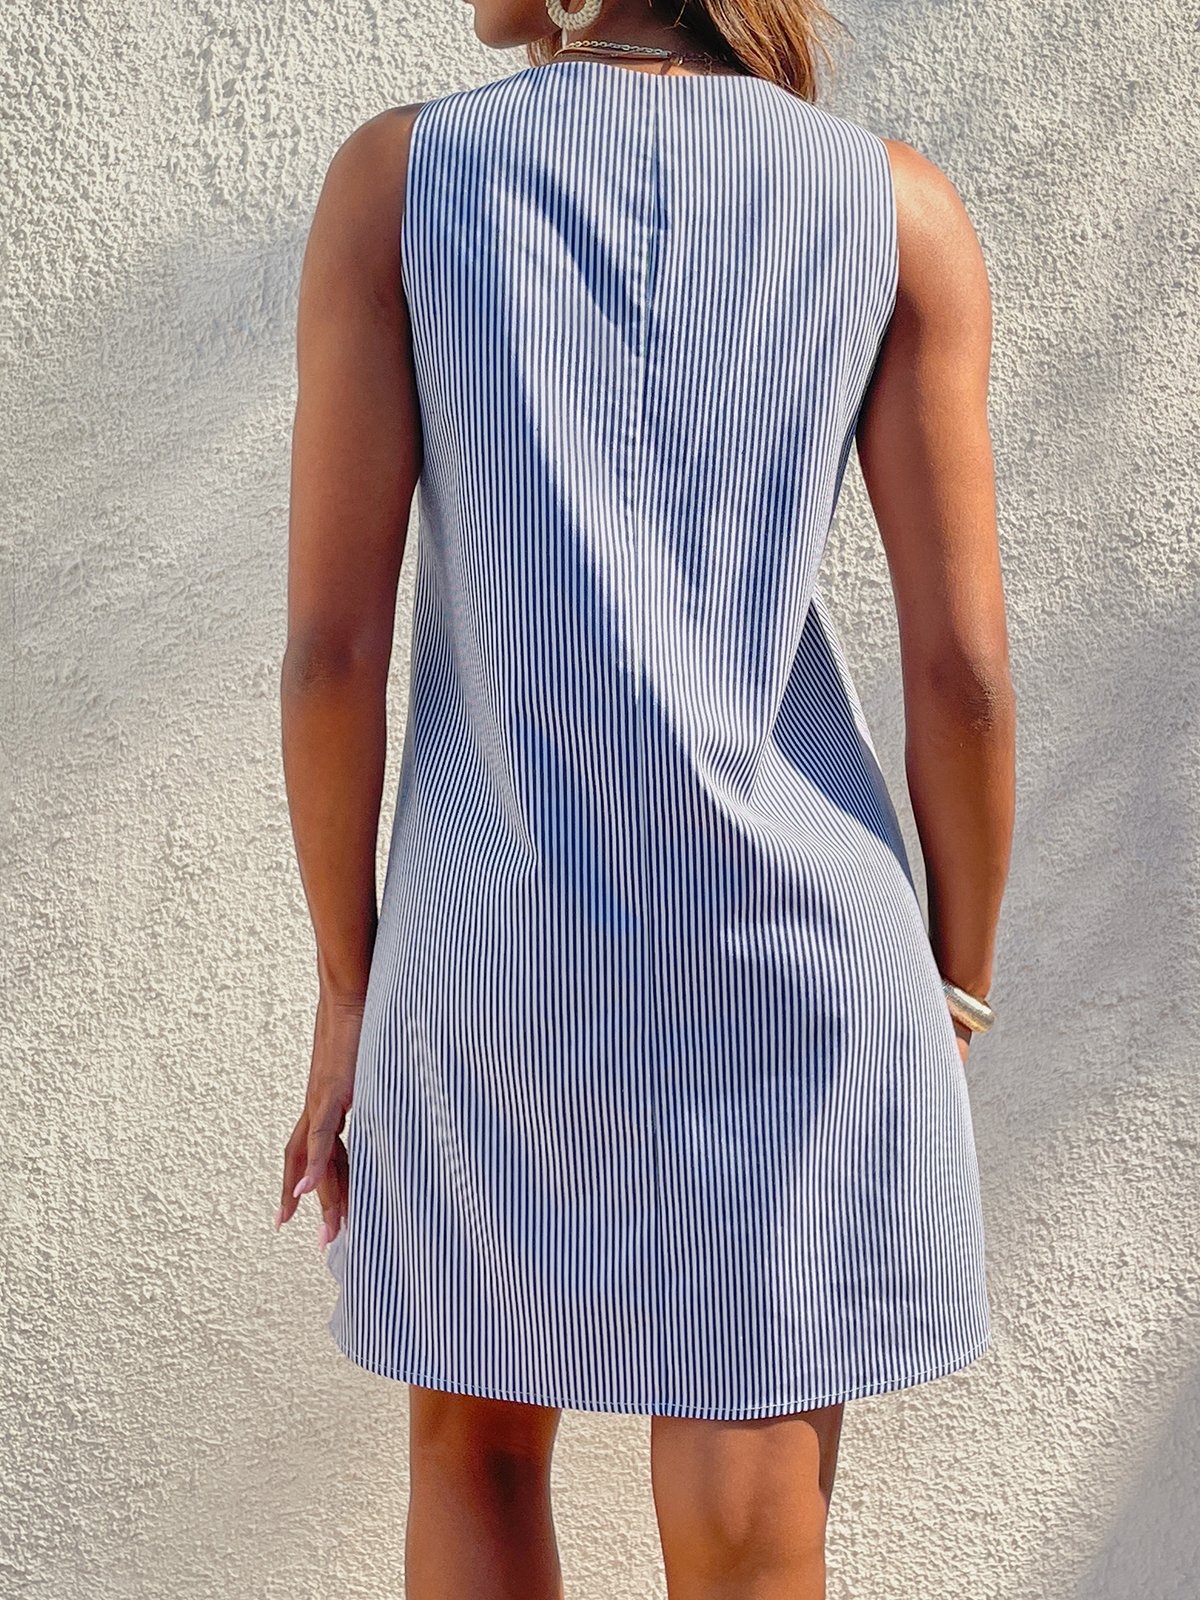 Women's Mini Dress Pockets Dress Holiday Striped Casual